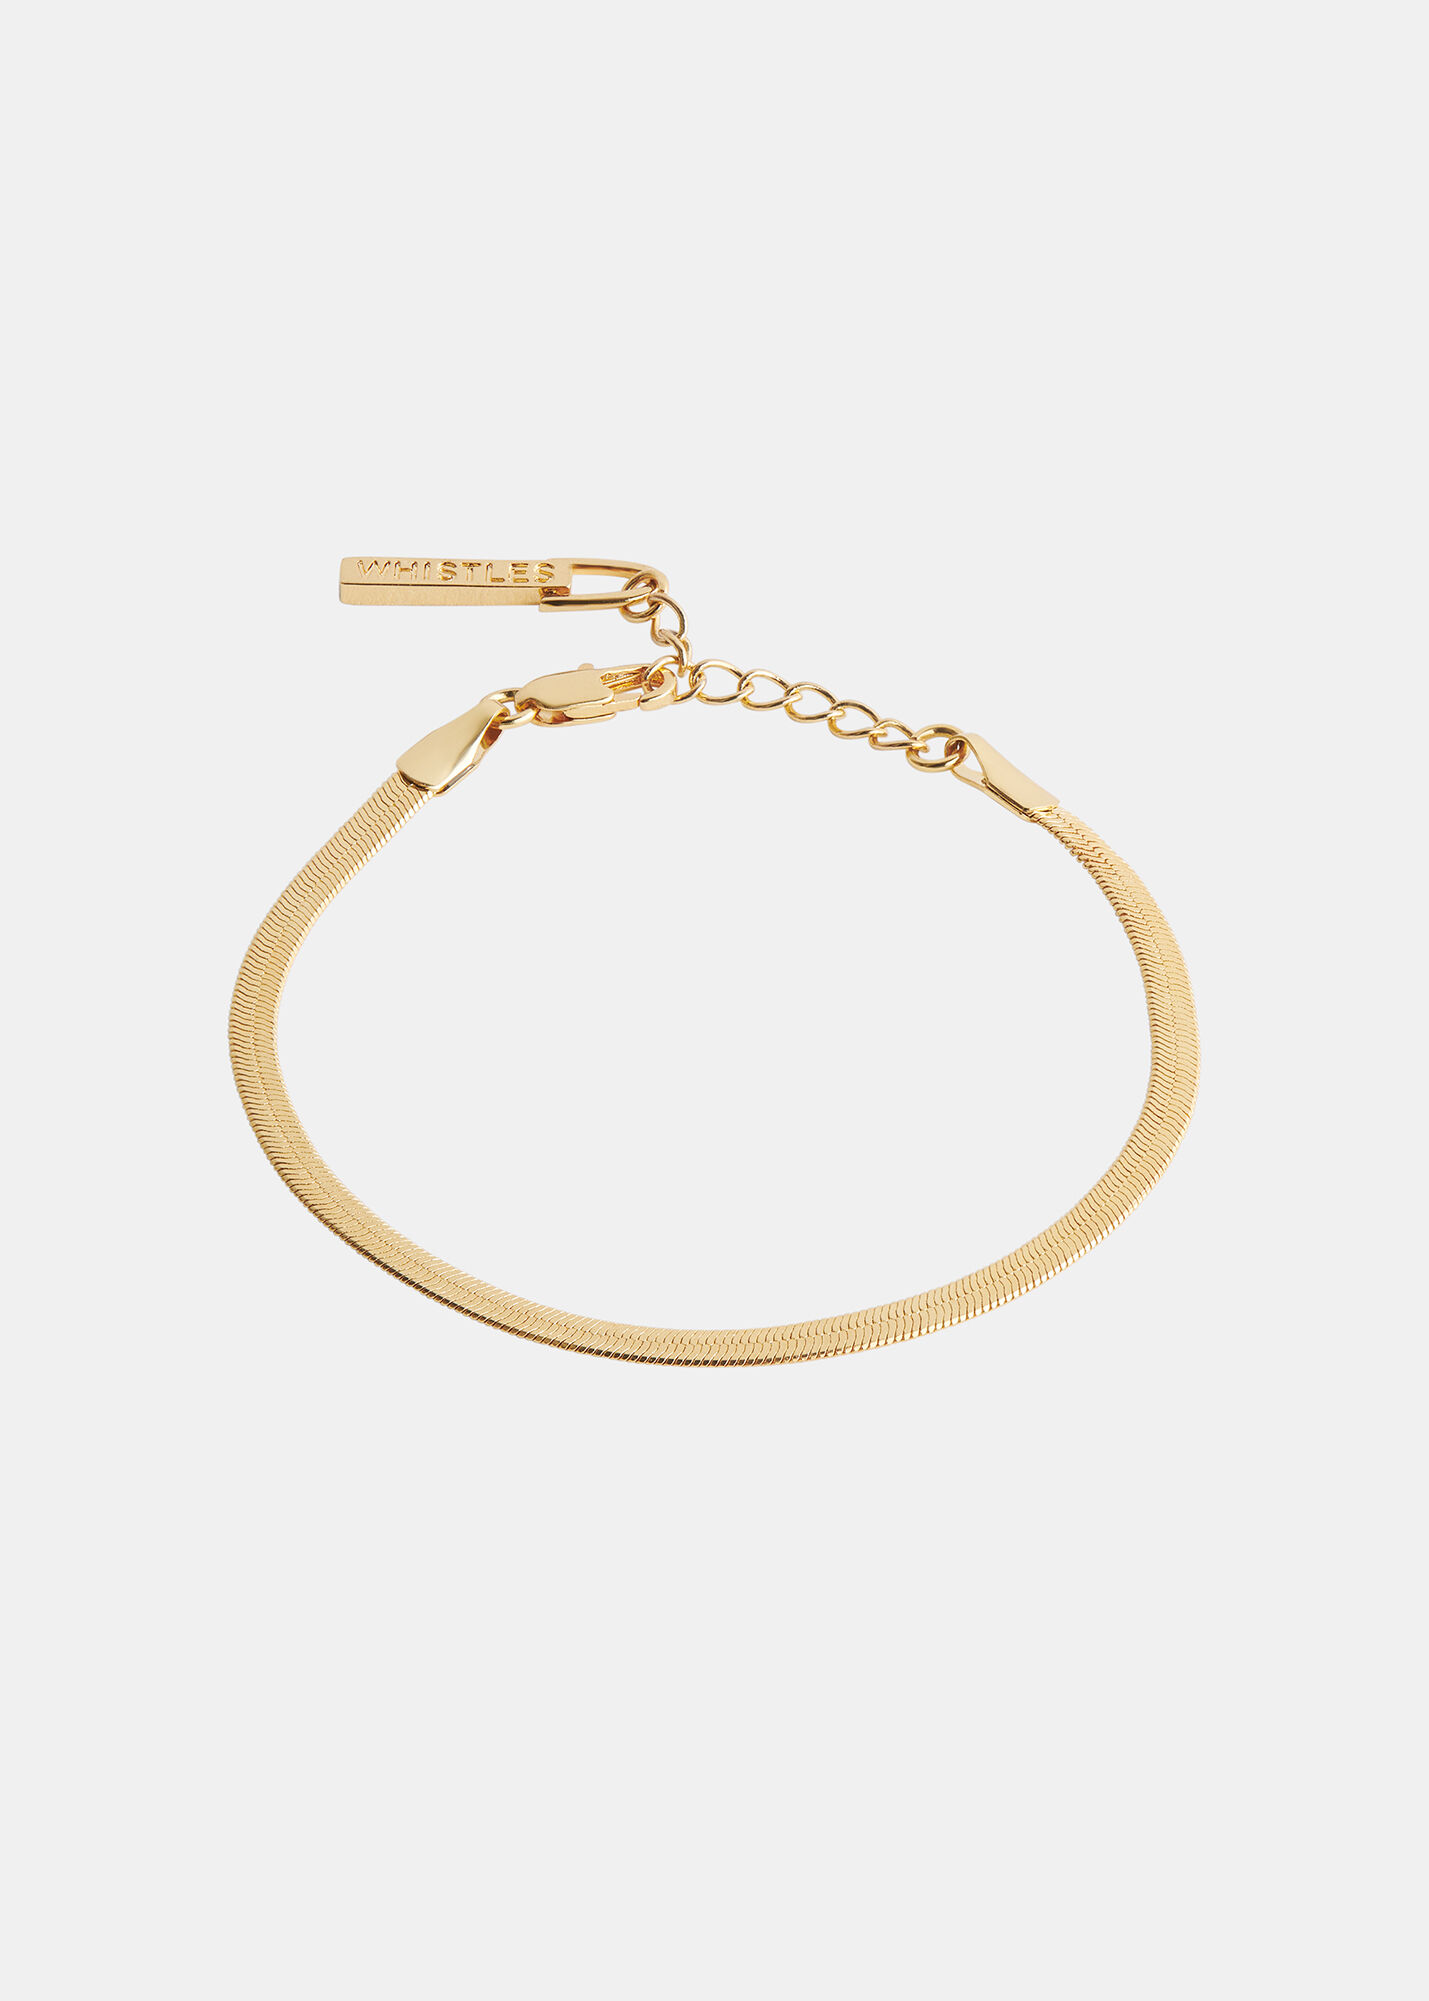 Ania Haie Gold Flat Snake Chain Bracelet  B04601G  Ice Jewellery  Australia